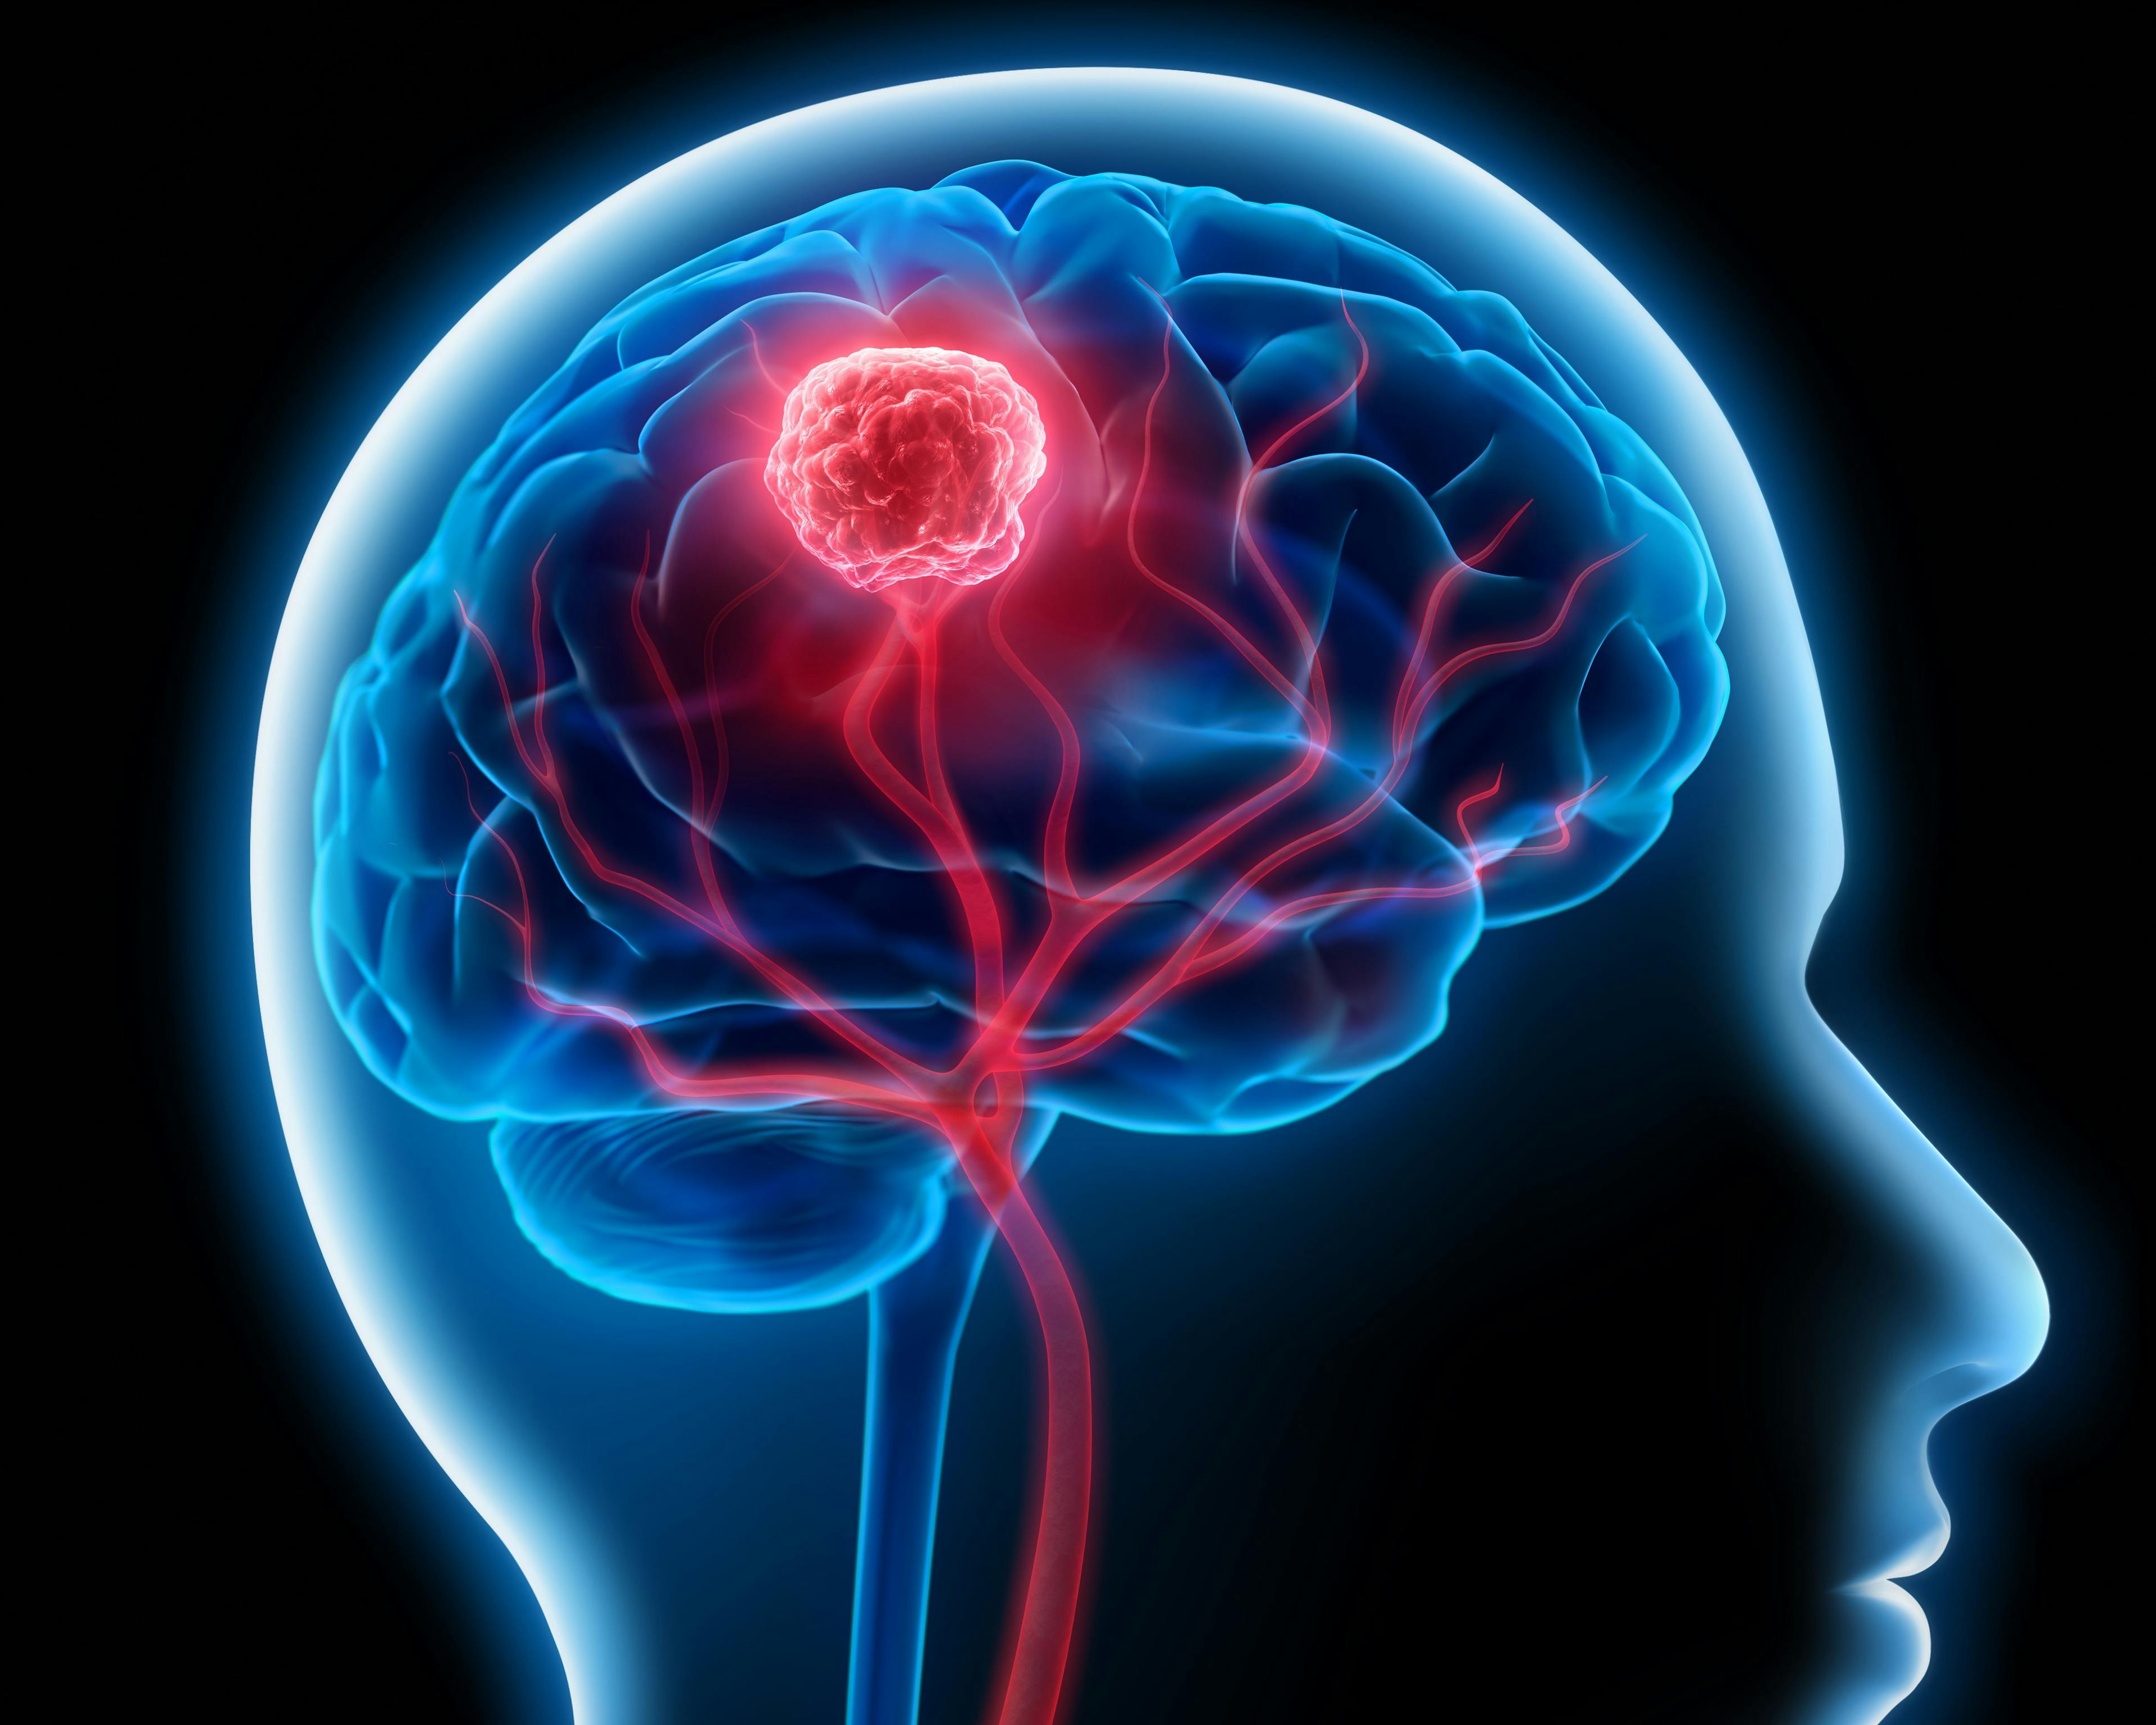 Tumor in brain: © peterschreiber.media - stock.adobe.com